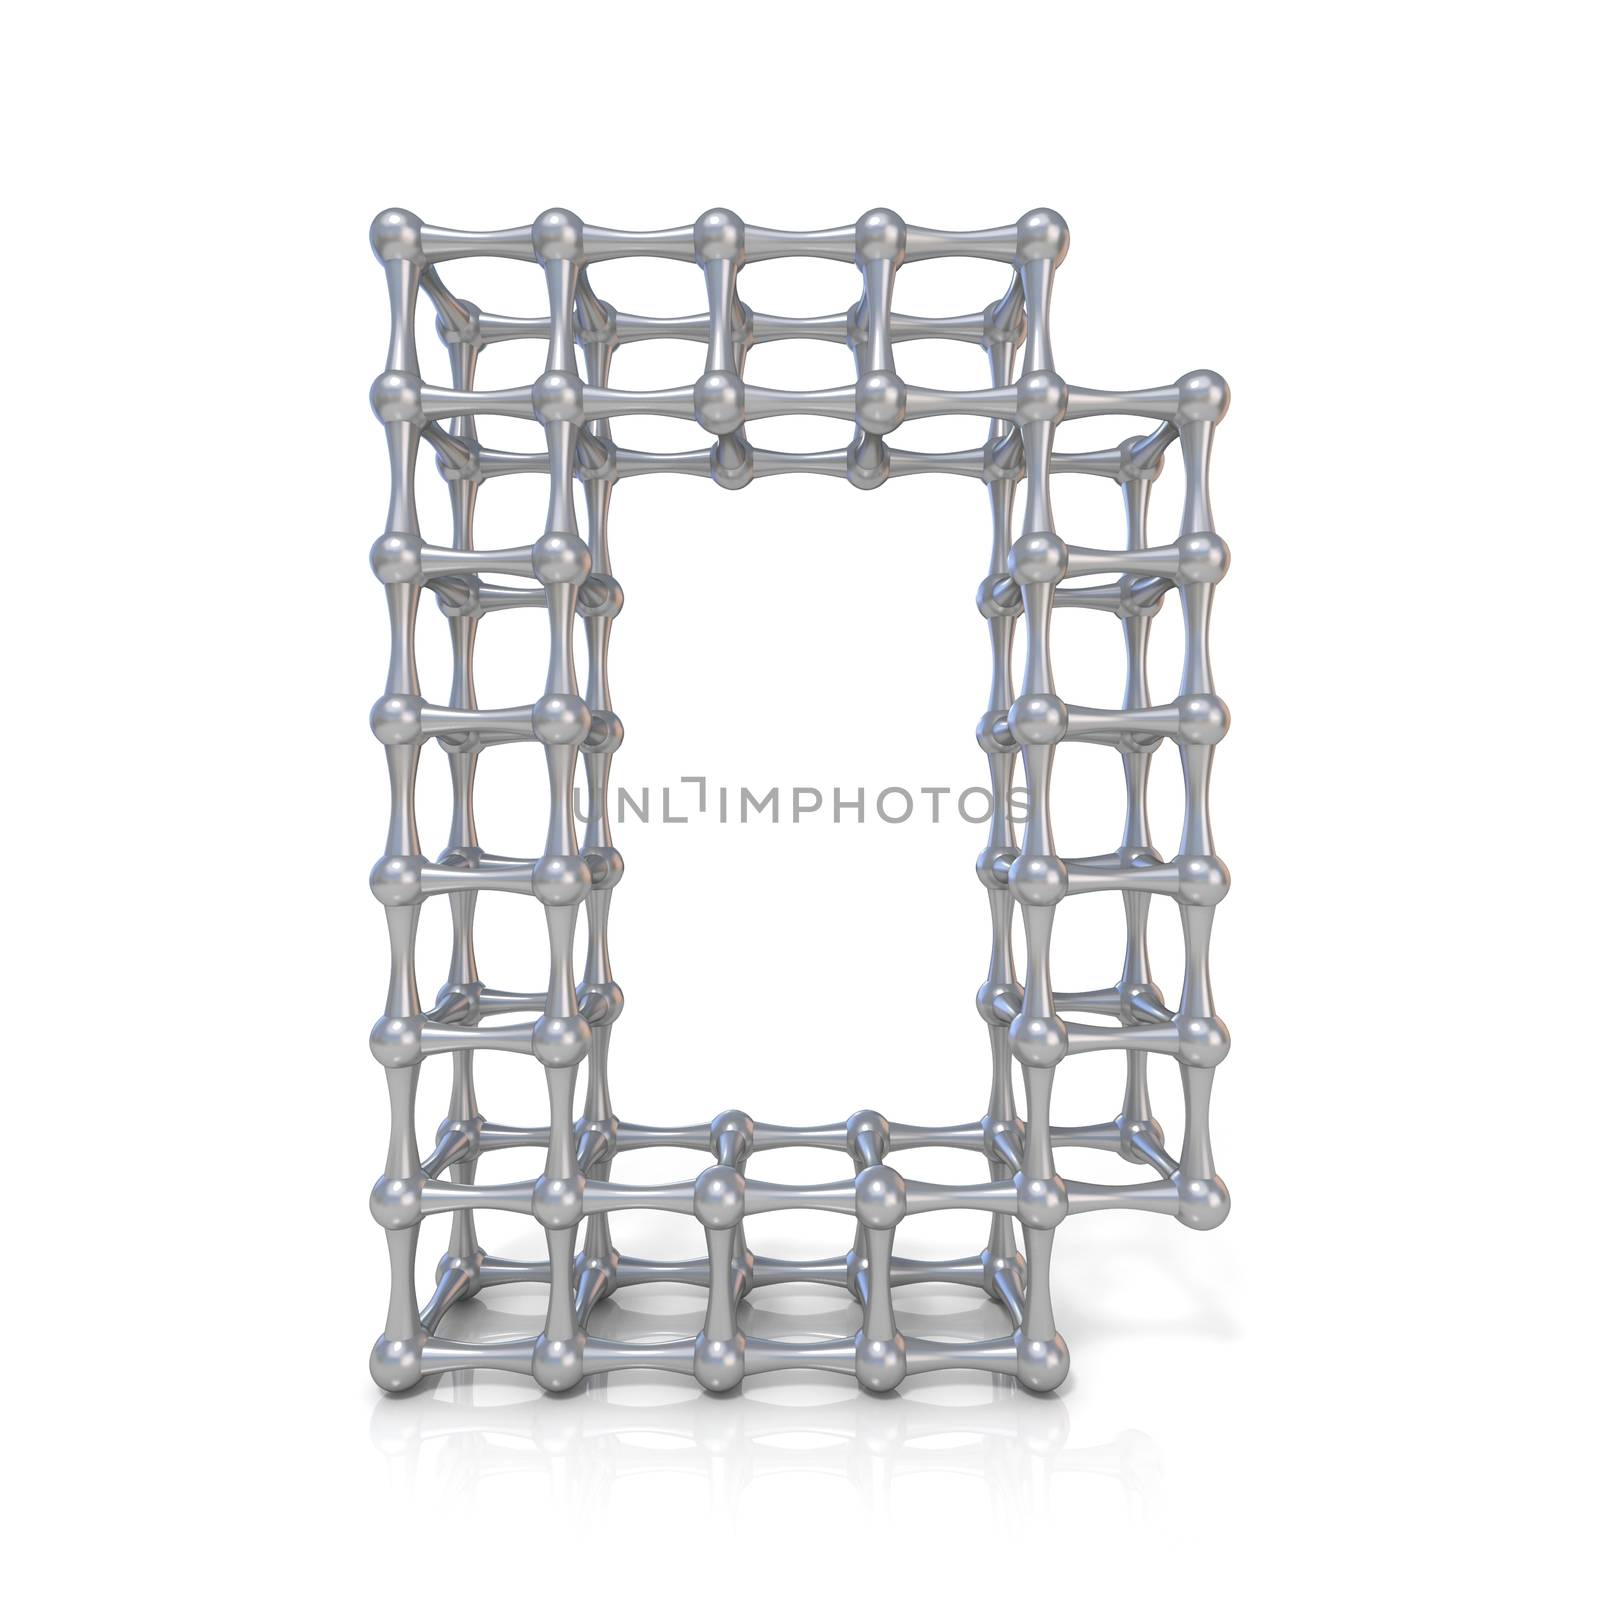 Metal lattice font letter D 3D render illustration isolated on white background